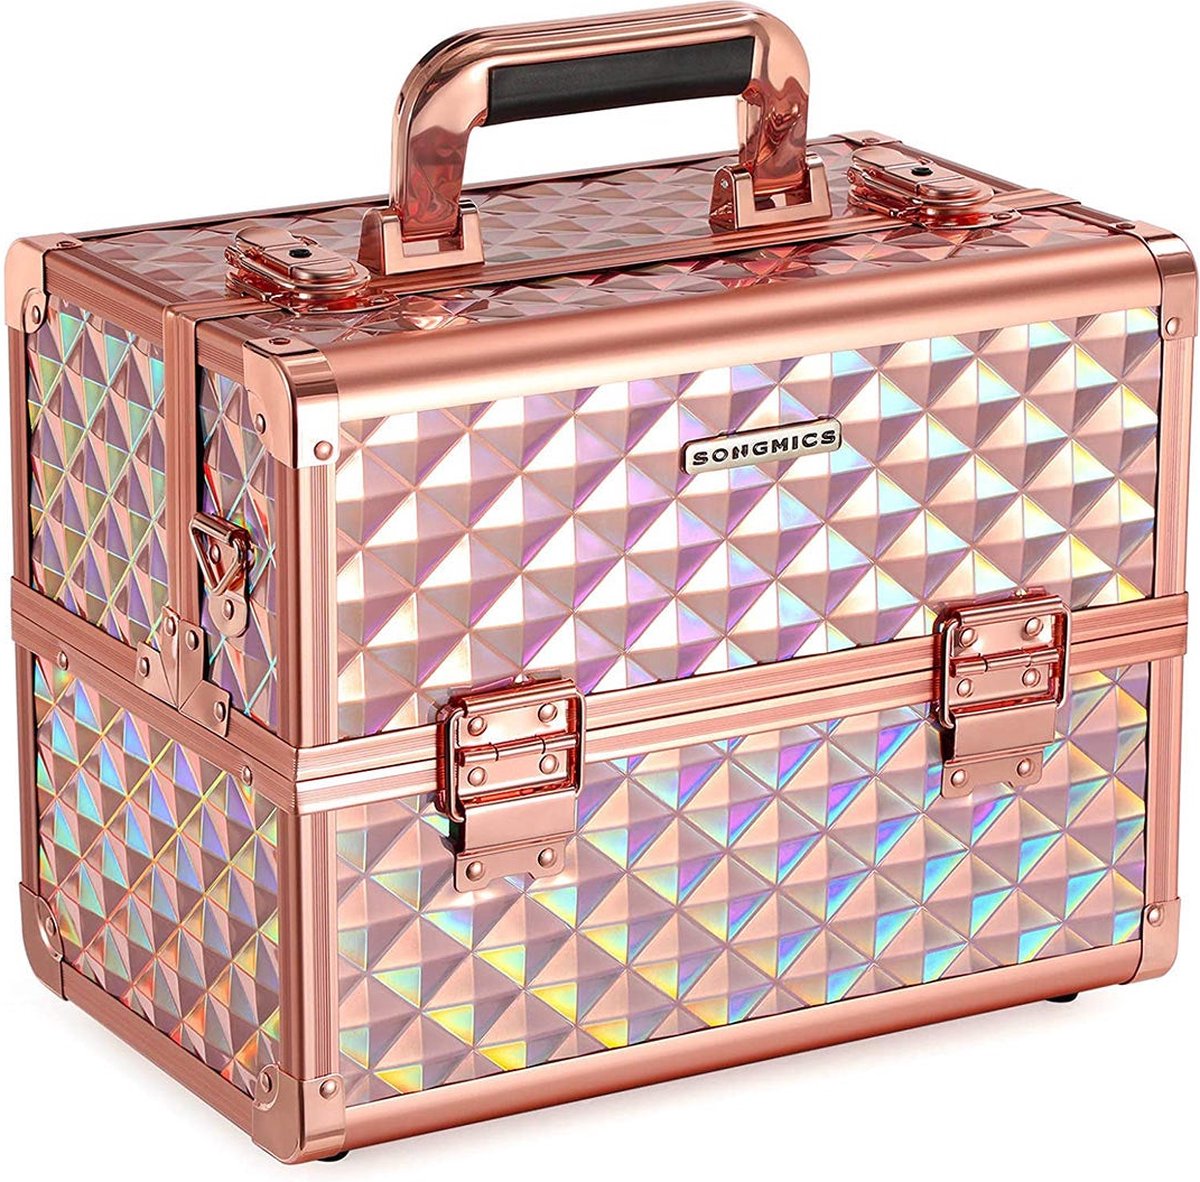 Beautycase - Make-up koffer - Opbergruimte voor make-up - Organizer - Metallic rosé